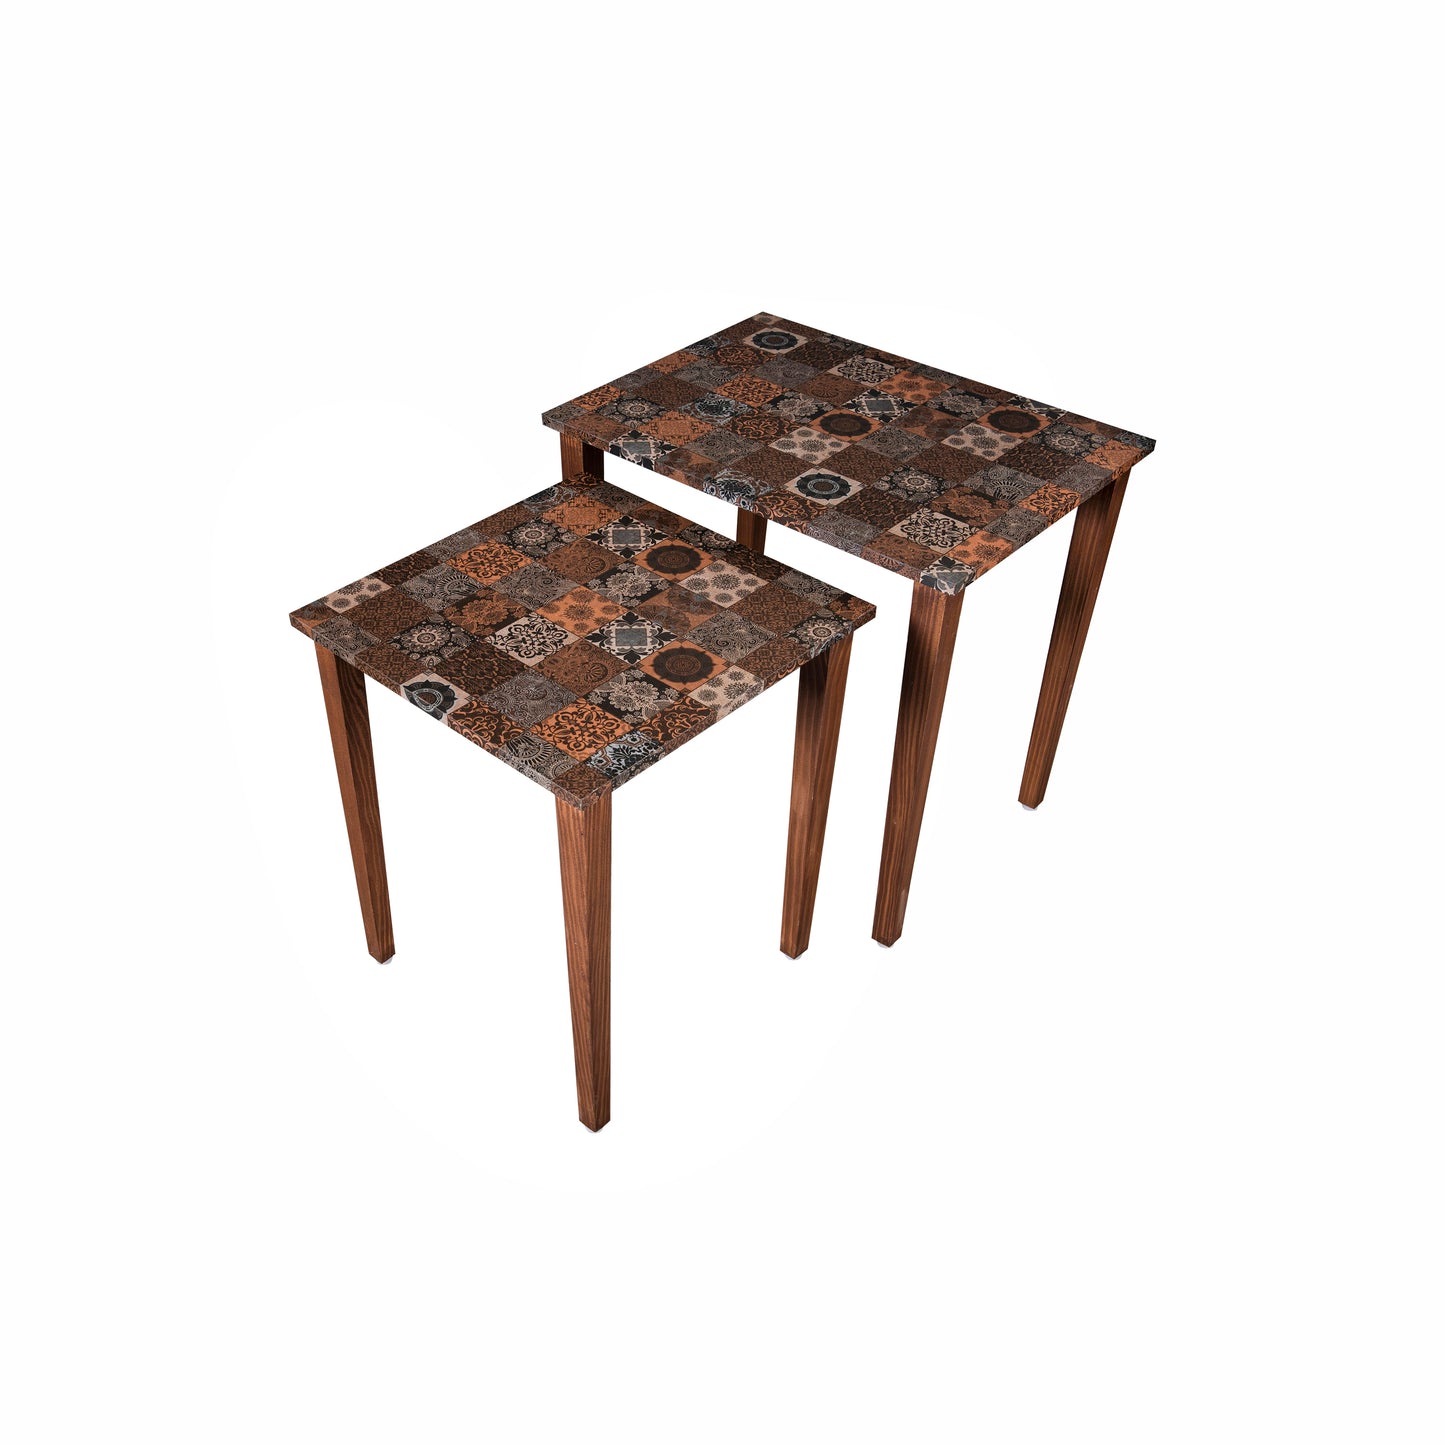 A Tiny Mistake Iznik Wooden Rectangle Nesting Tables (Set of 2), Living Room Decor